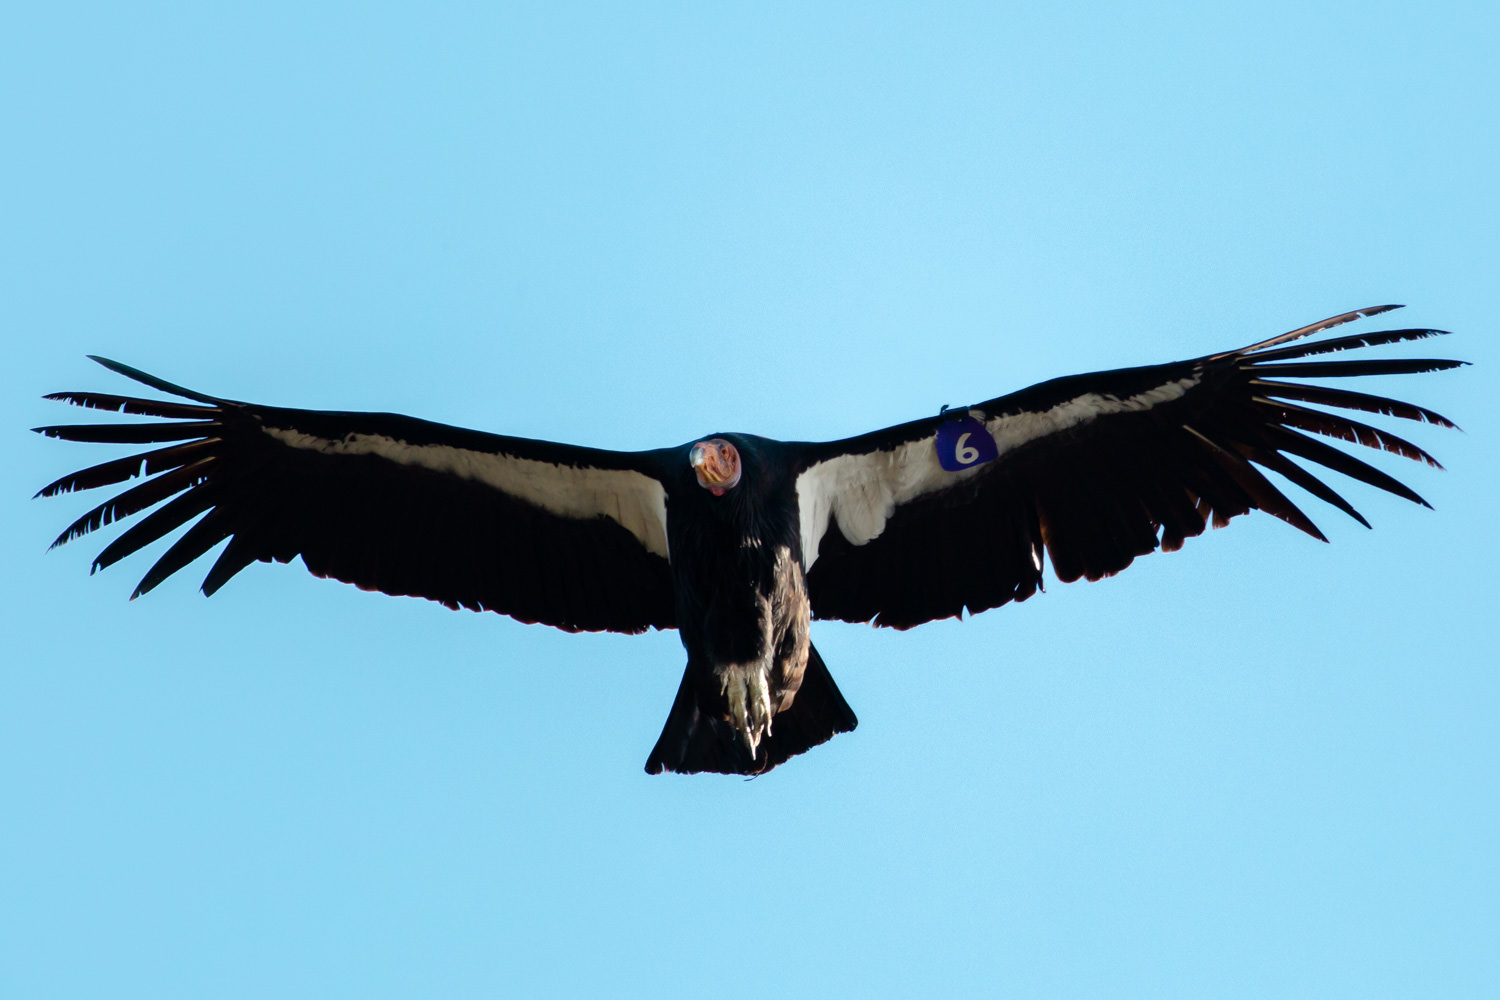 California condor (tag #6, purple6) flying overhead in Pinnacles National Park (April 2018)